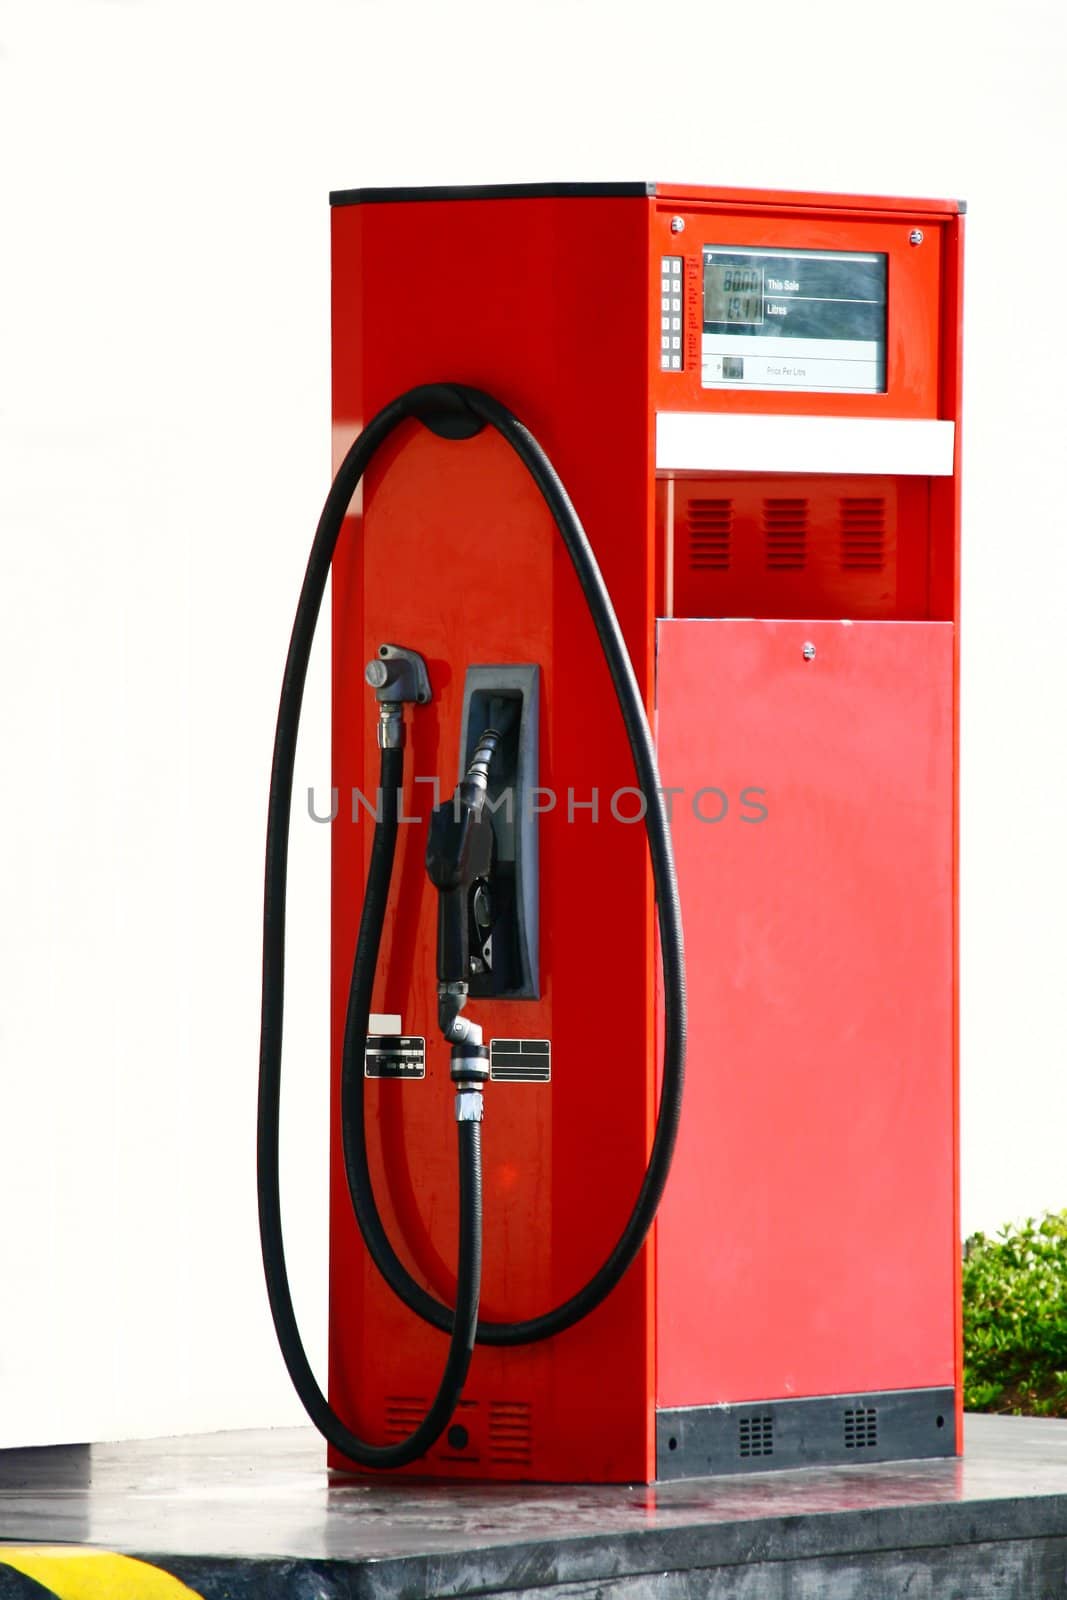 shabby lone gasoline pump on a self-service station
